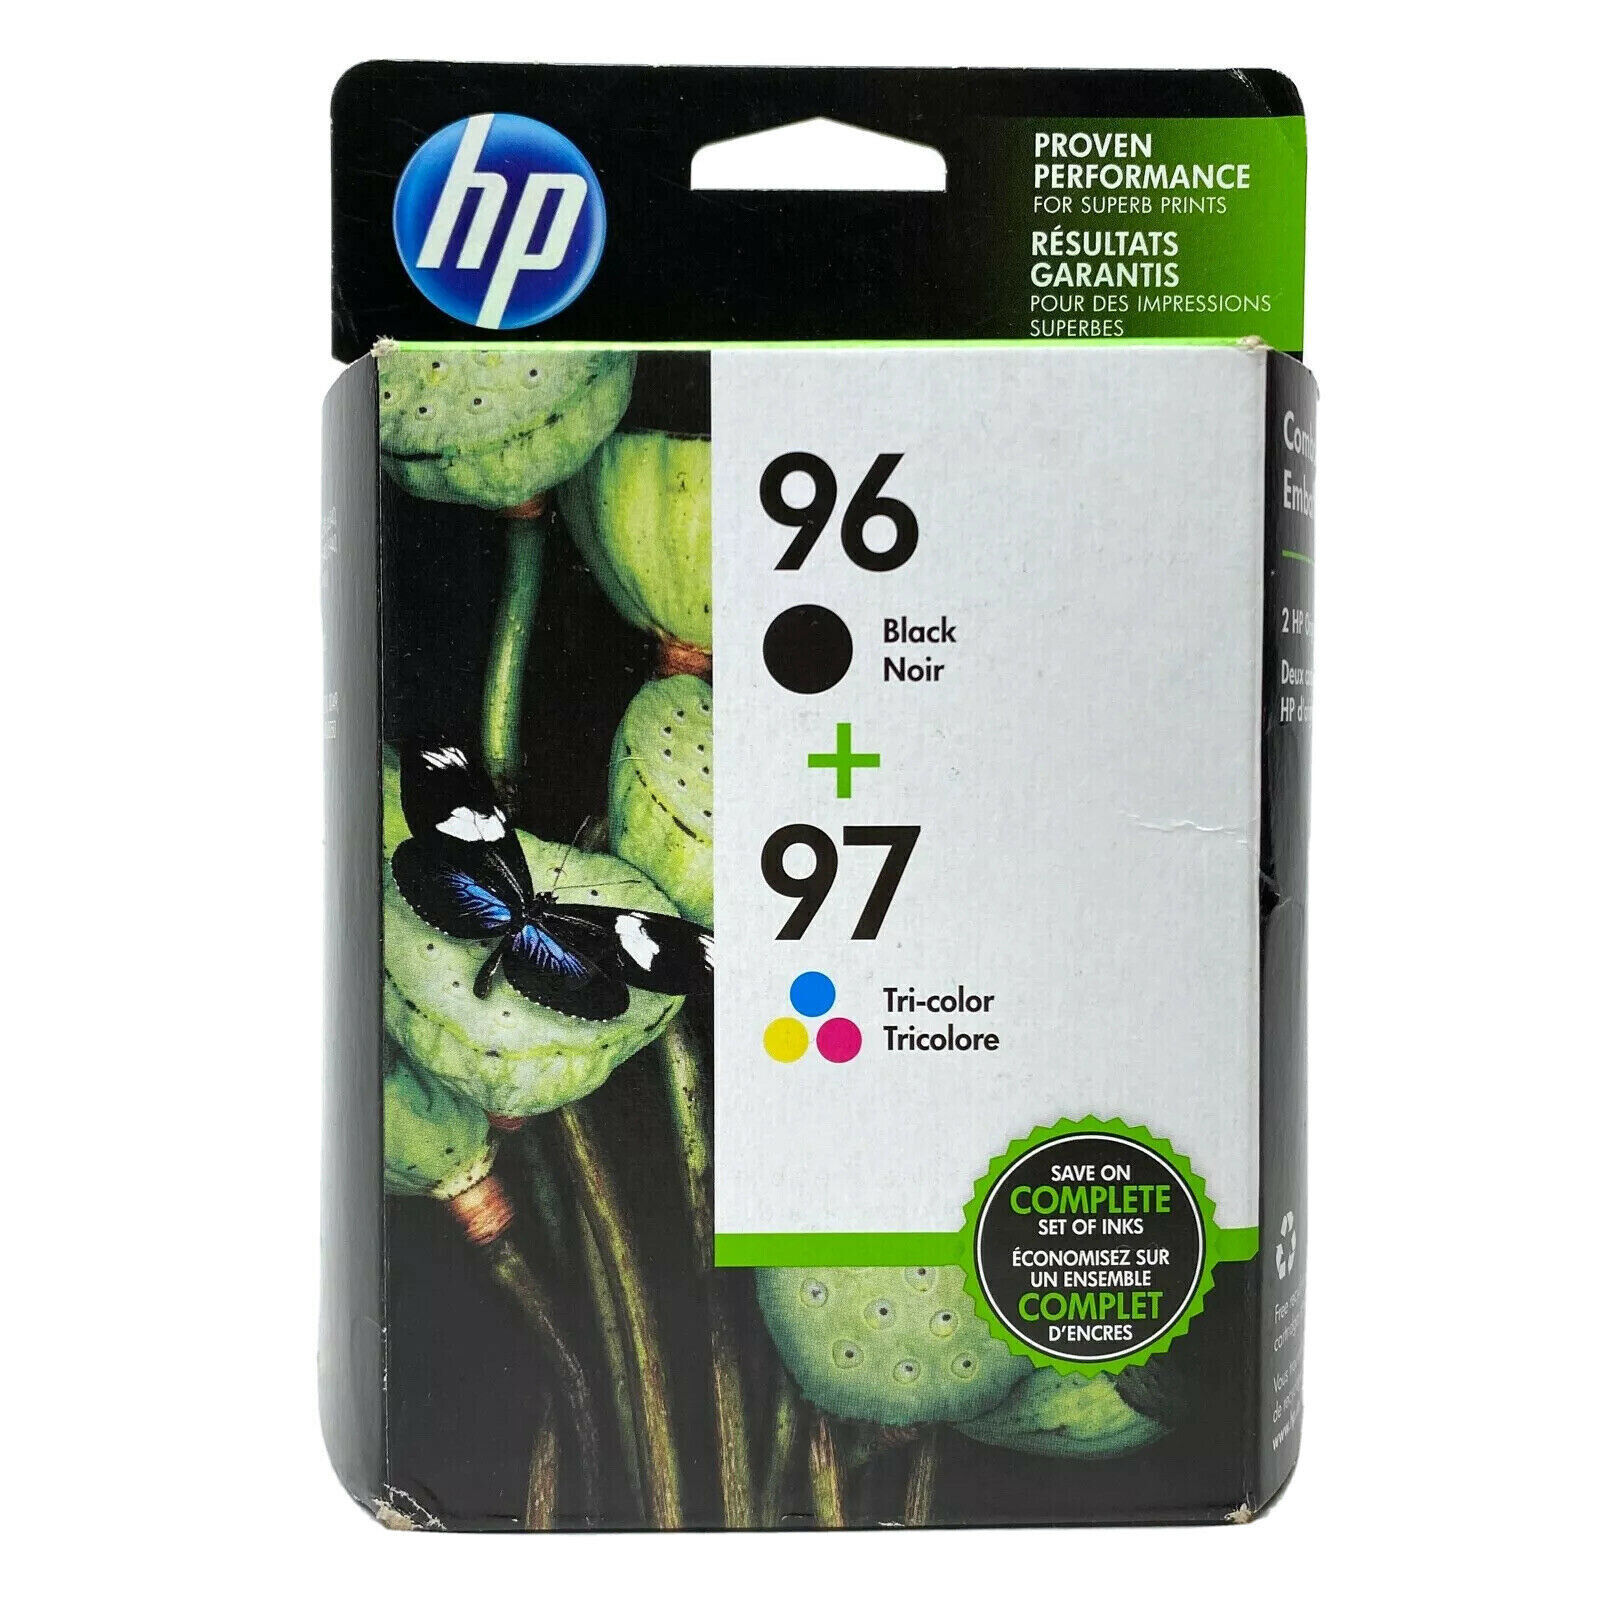 Genuine HP 96 97 Ink Cartridges for HP Printer-OEM-NO Box-Expired